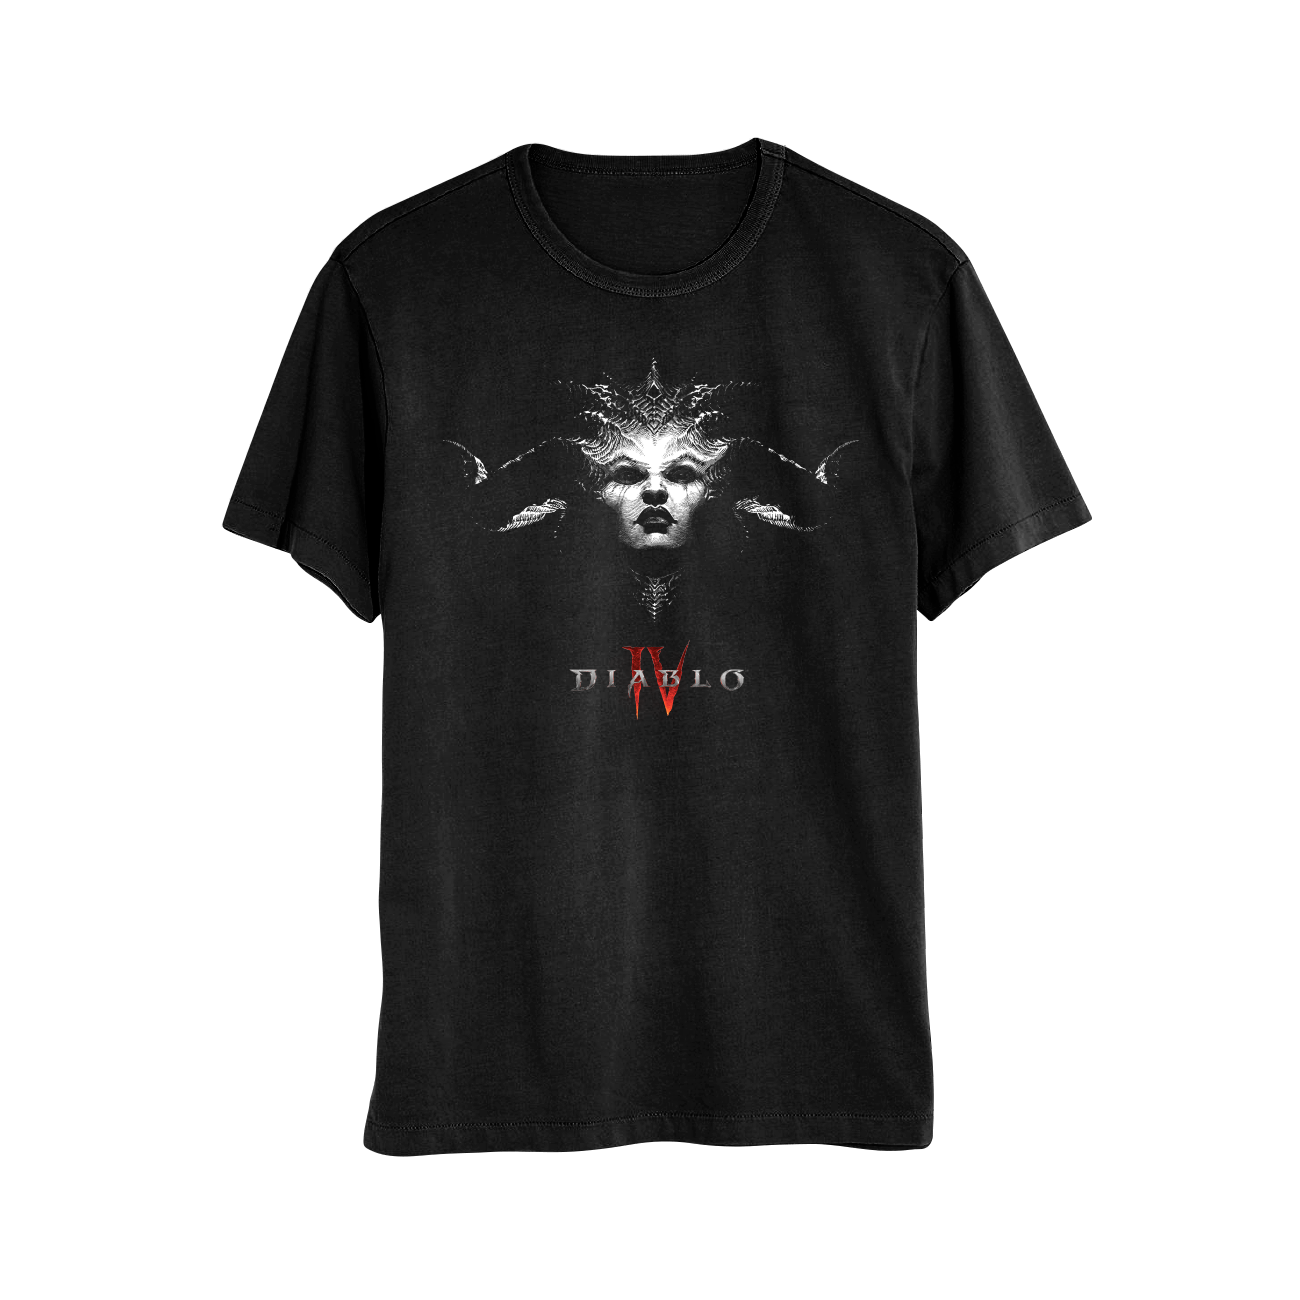 Diablo IV Unisex Short Sleeve T-Shirt